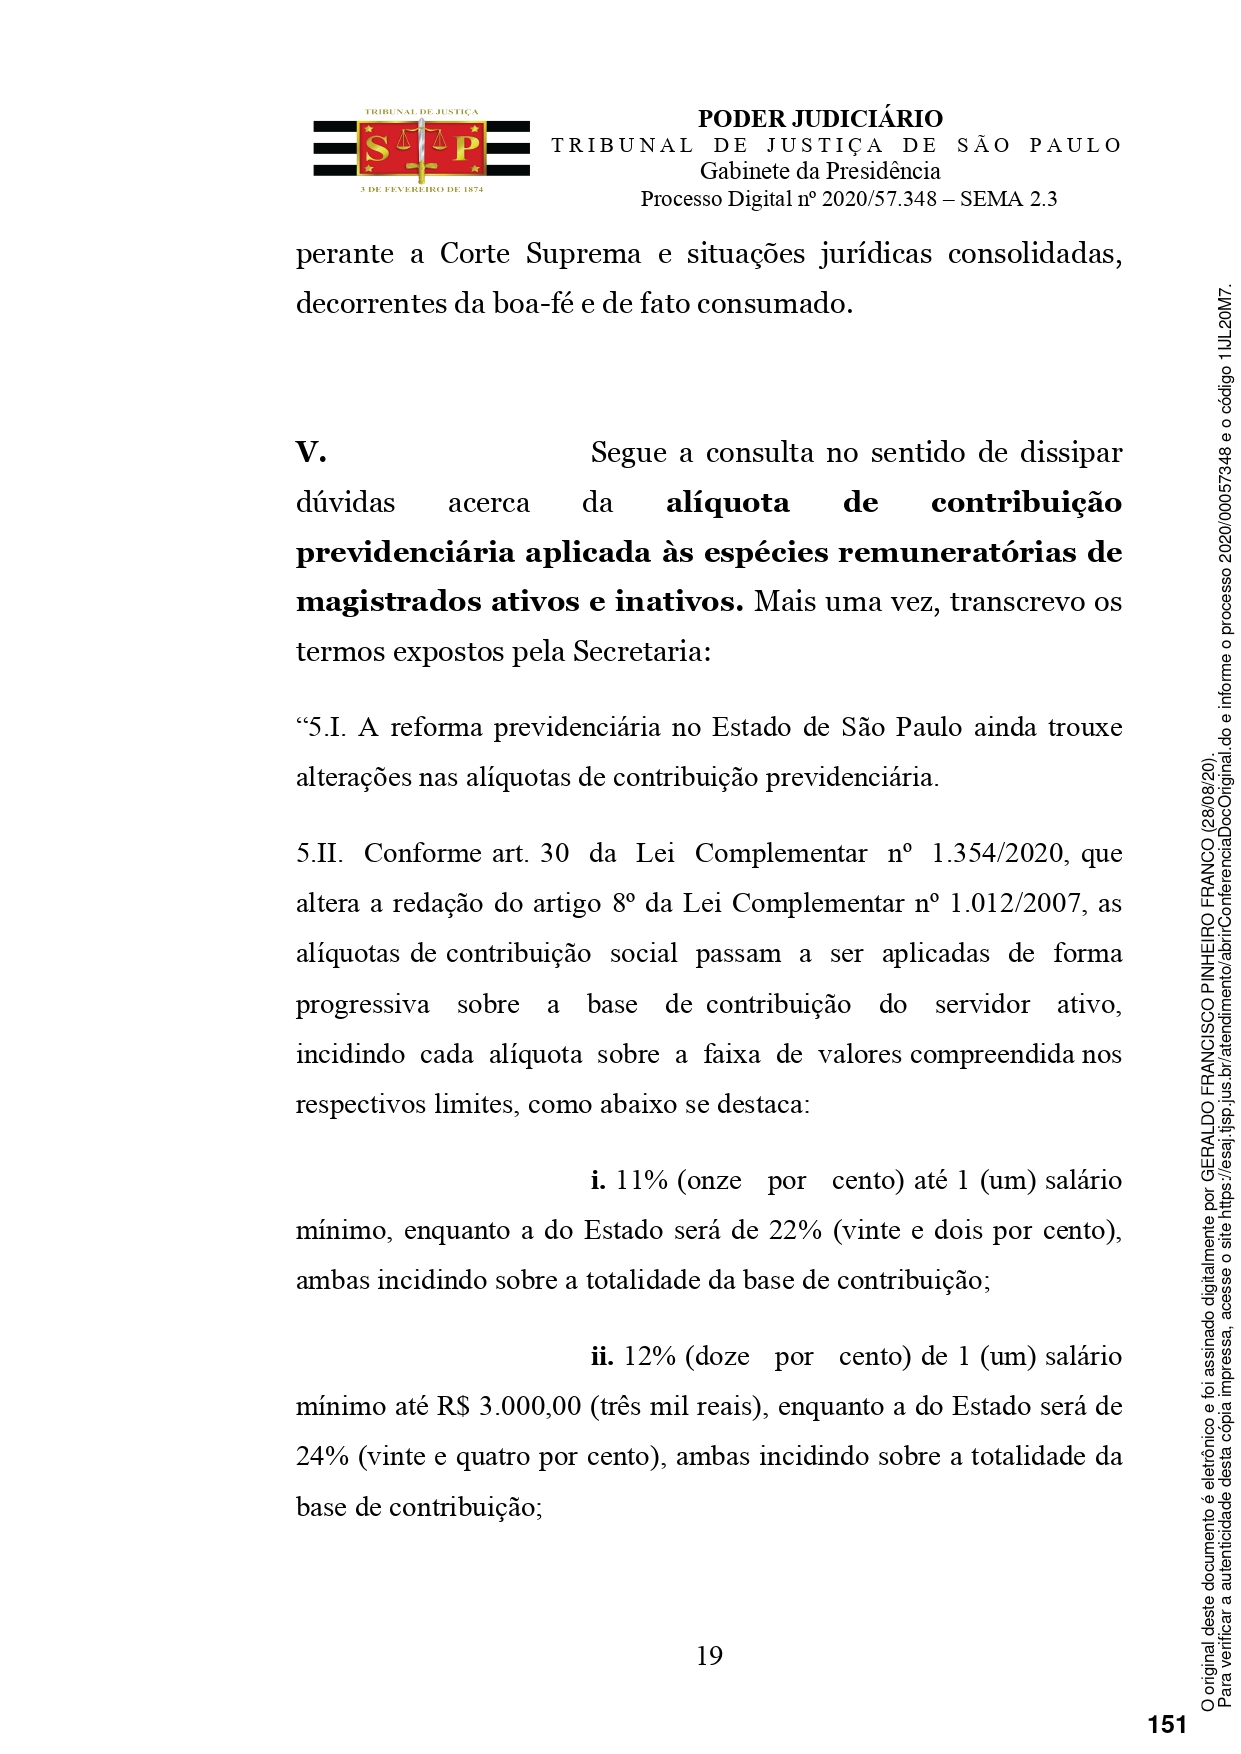 reforma-previdencia-tj-sp_page-0019.jpg